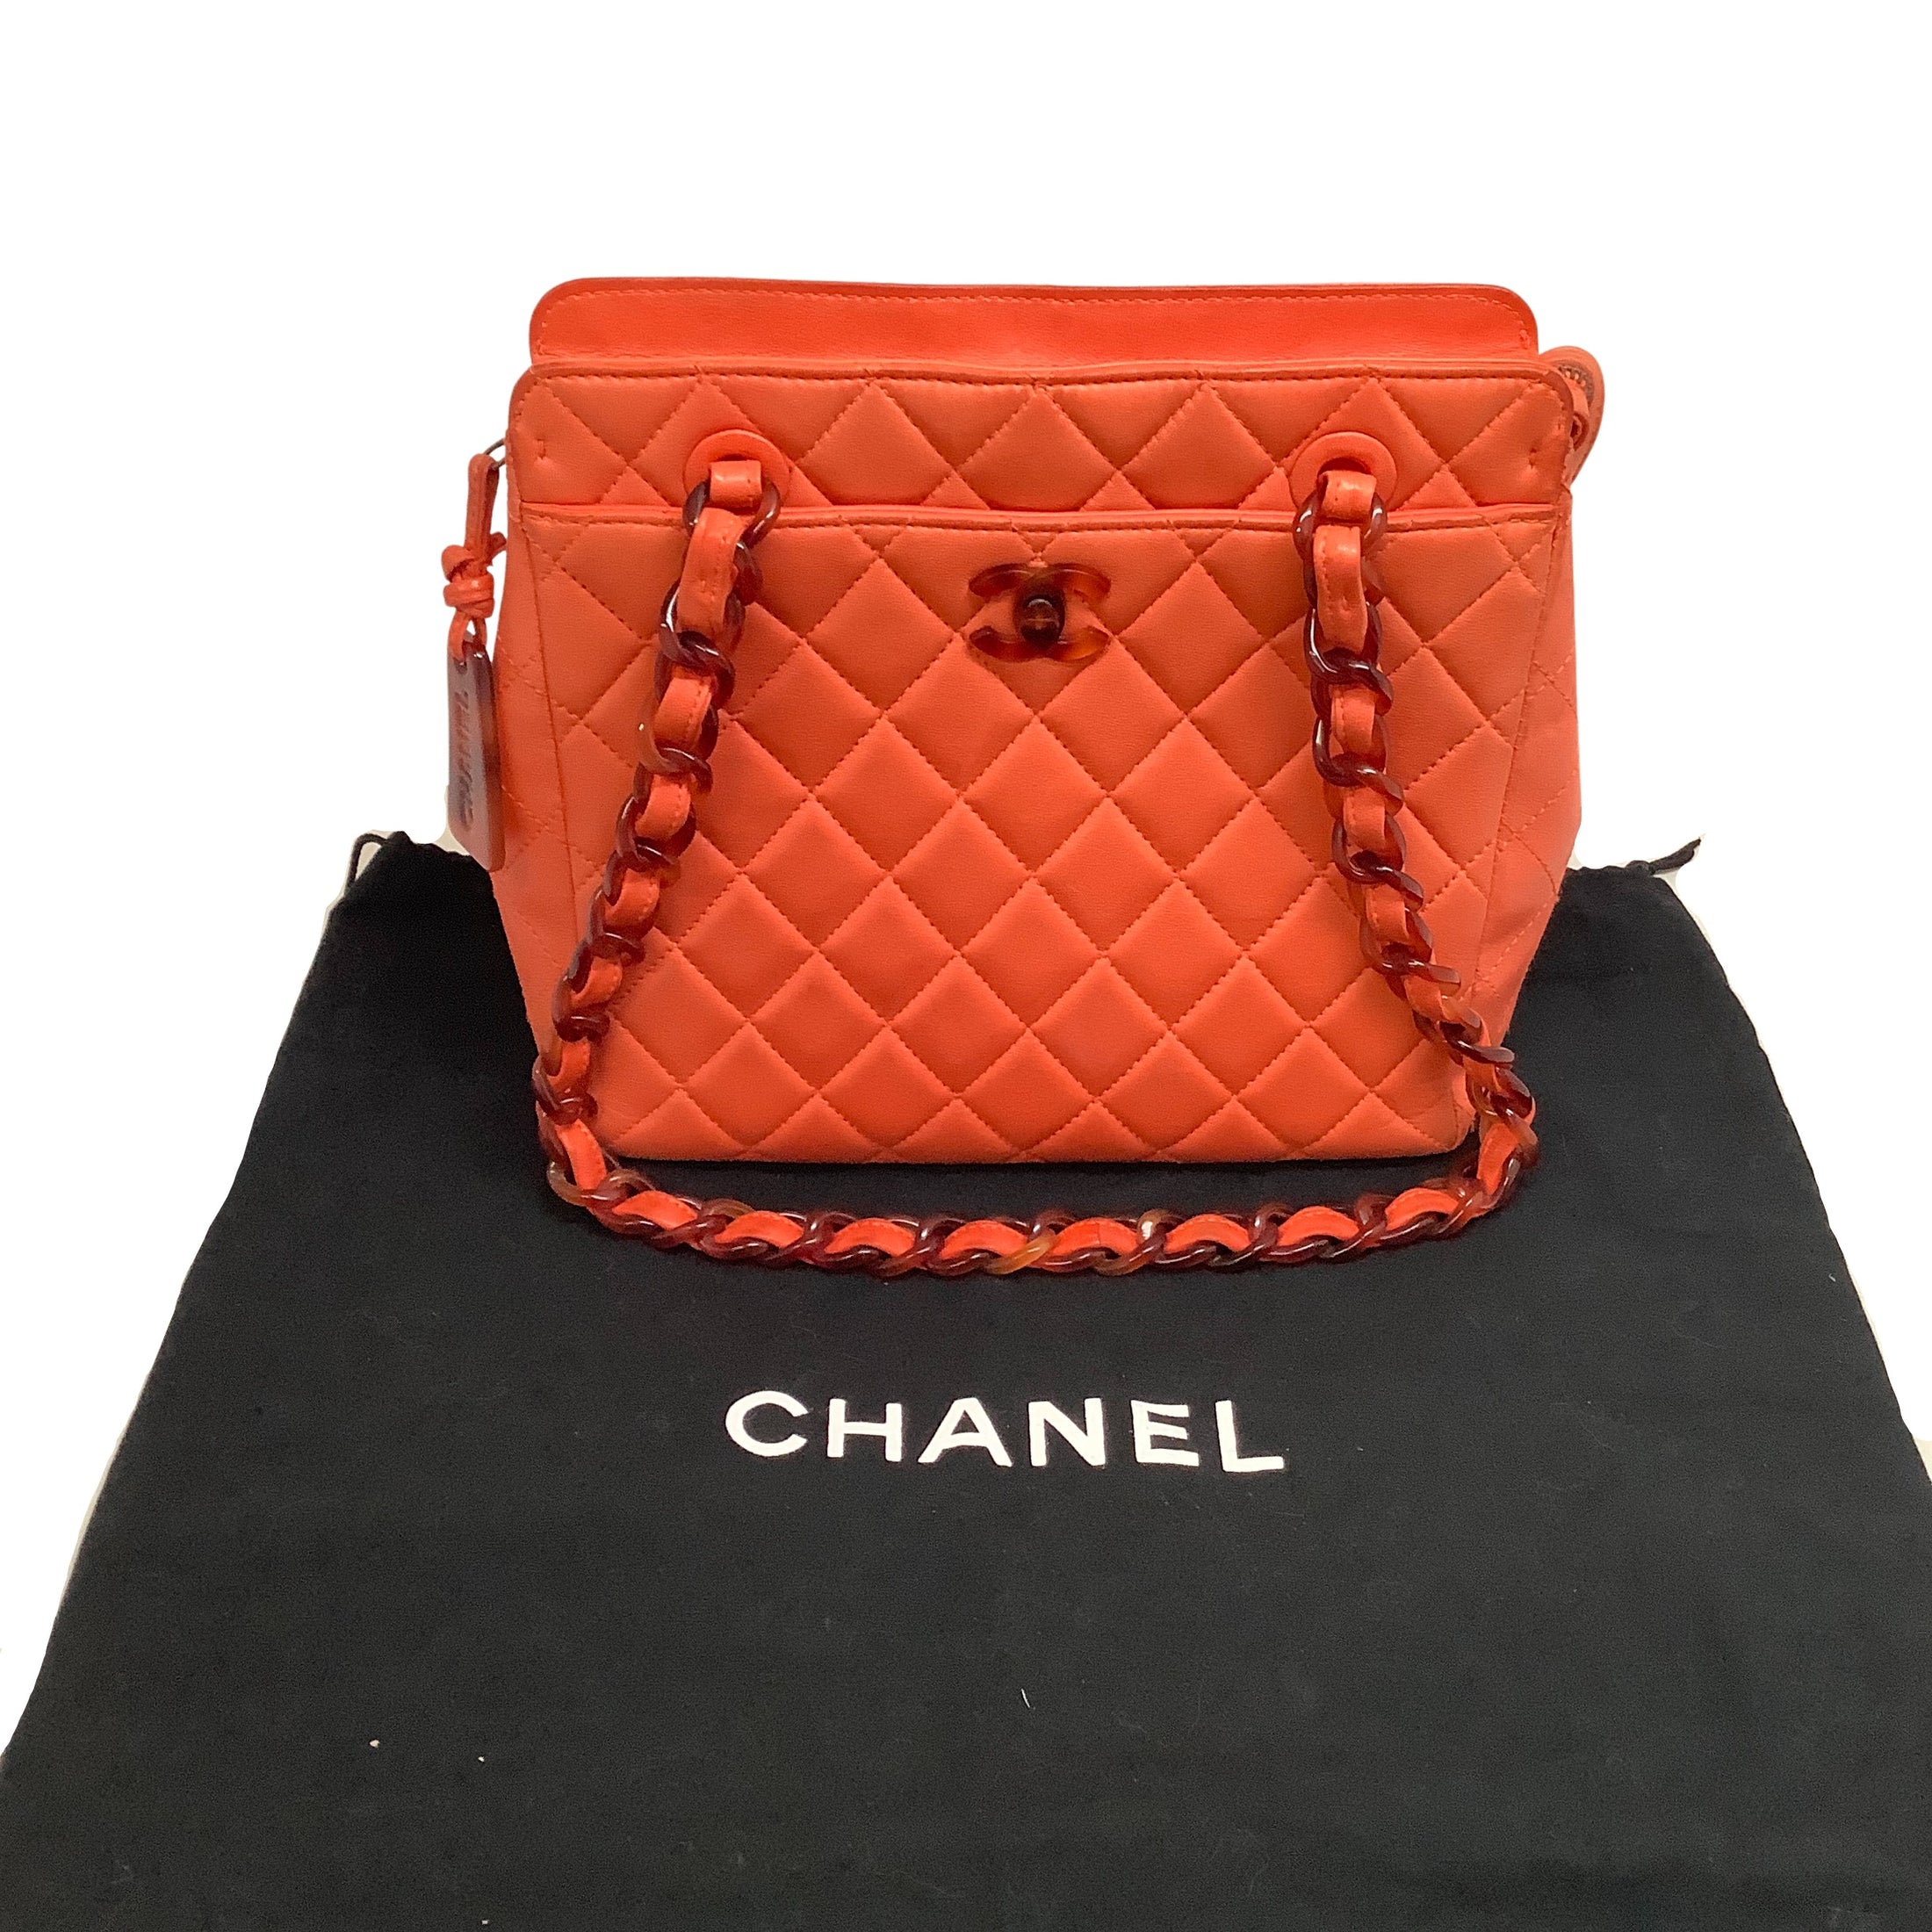 Chanel Vintage Orange Lambskin Leather Quilted Shoulder Bag with Tortoise Acrylic Hardware